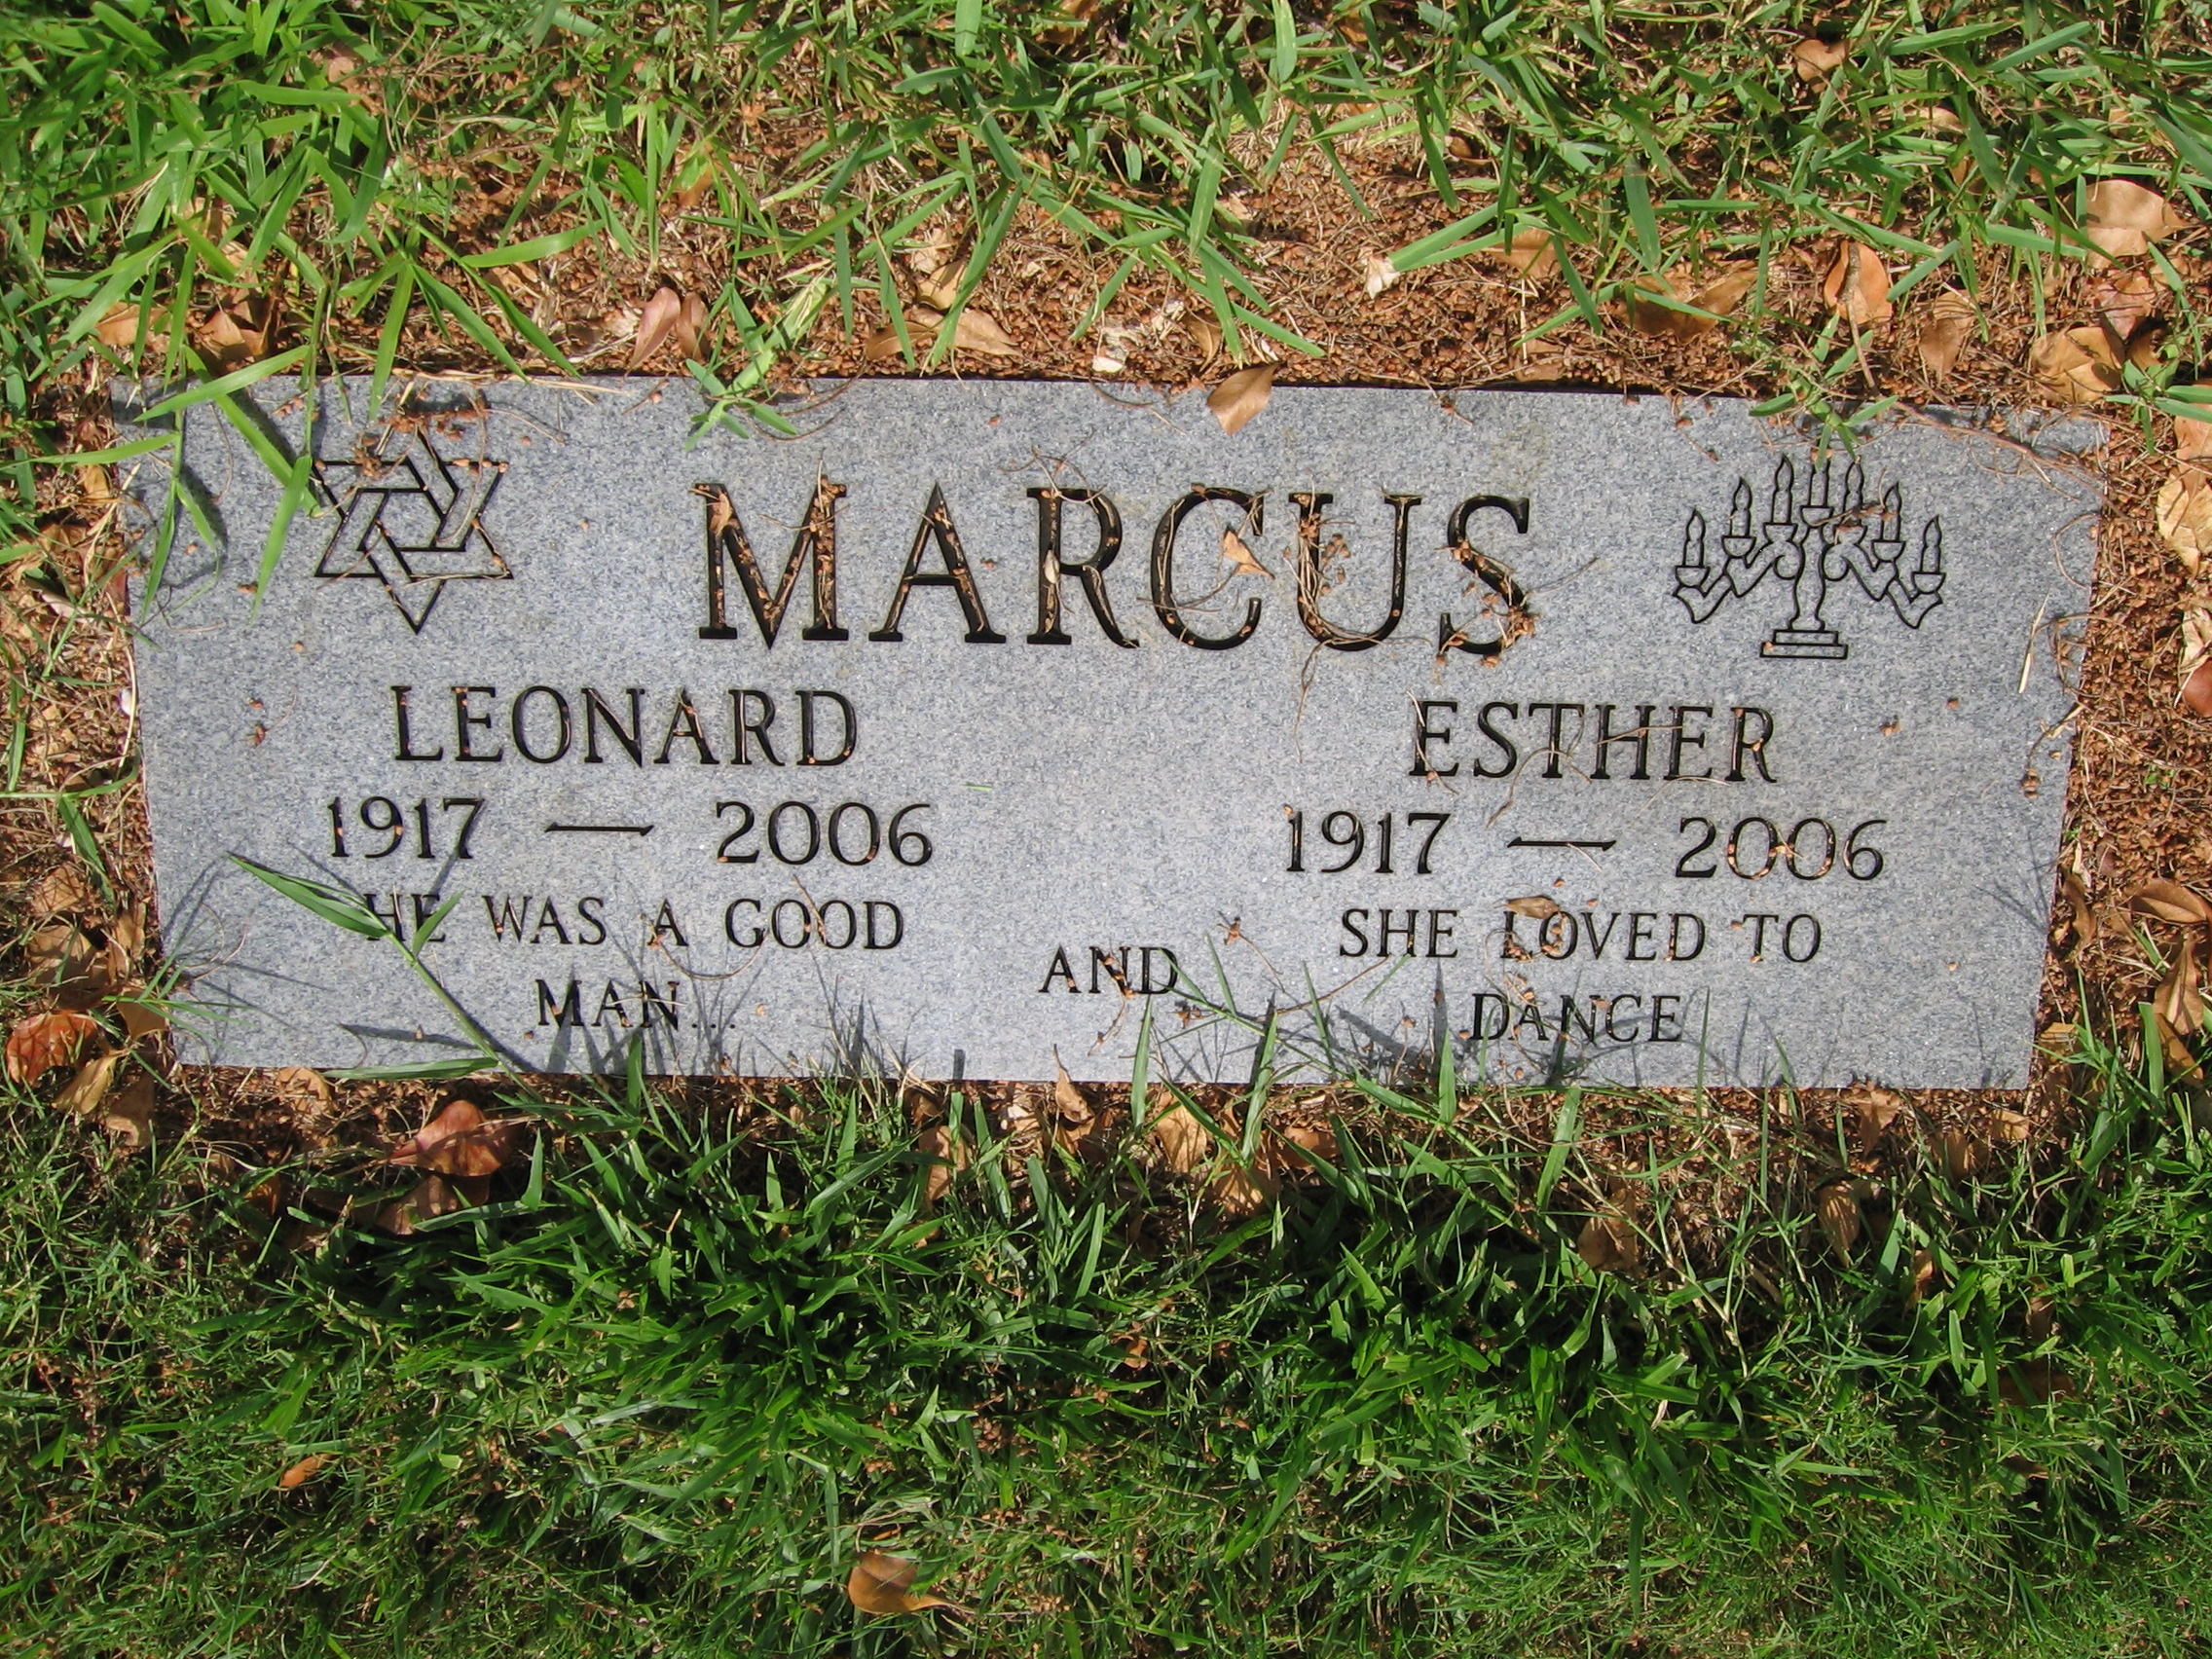 Leonard Marcus